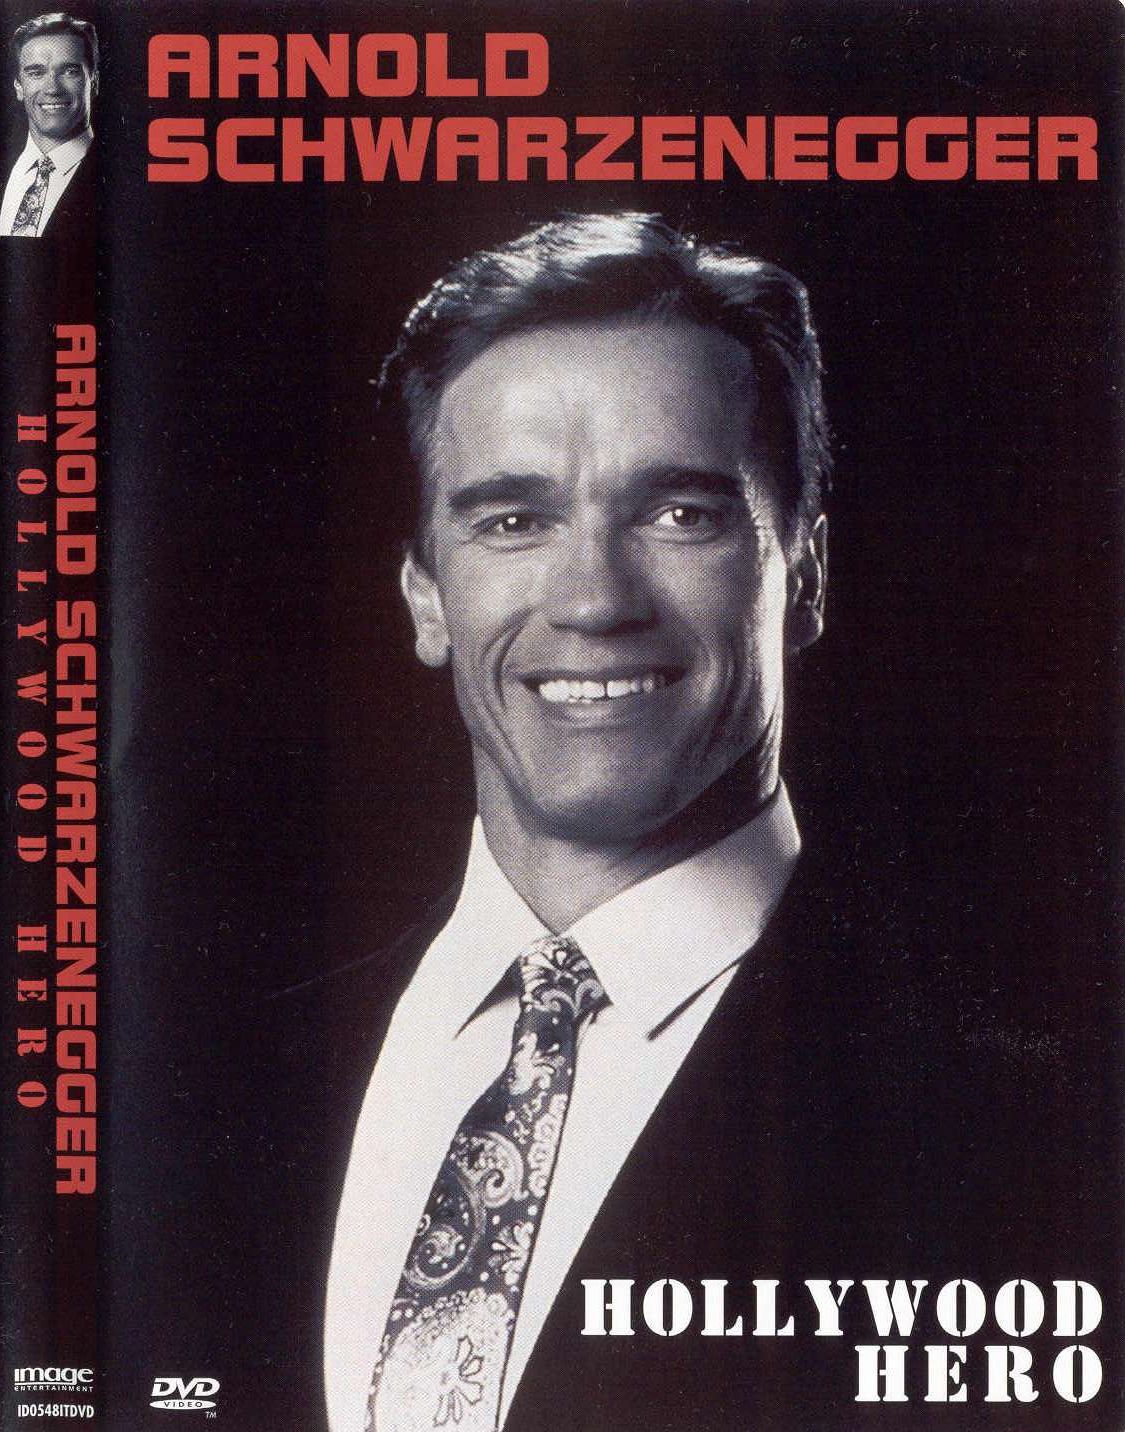 Arnold Schwarzenegger - Hollywood Hero - Region 1 - DVD Cover - FRONT
Keywords: ;media_cover;terminator_media